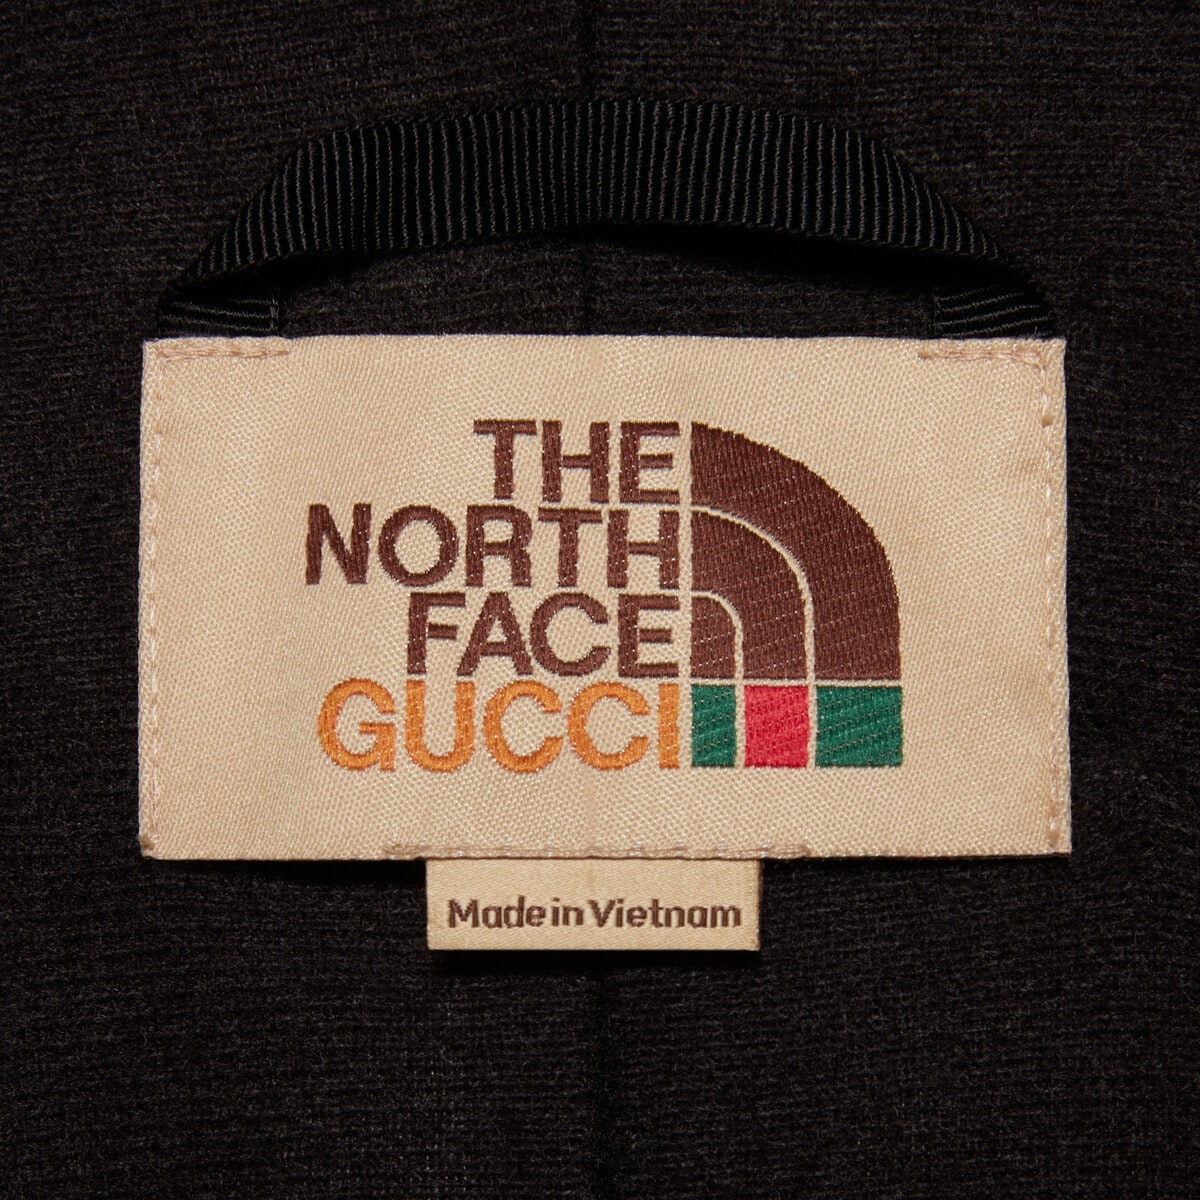 The North Face x Gucci overalls - 4